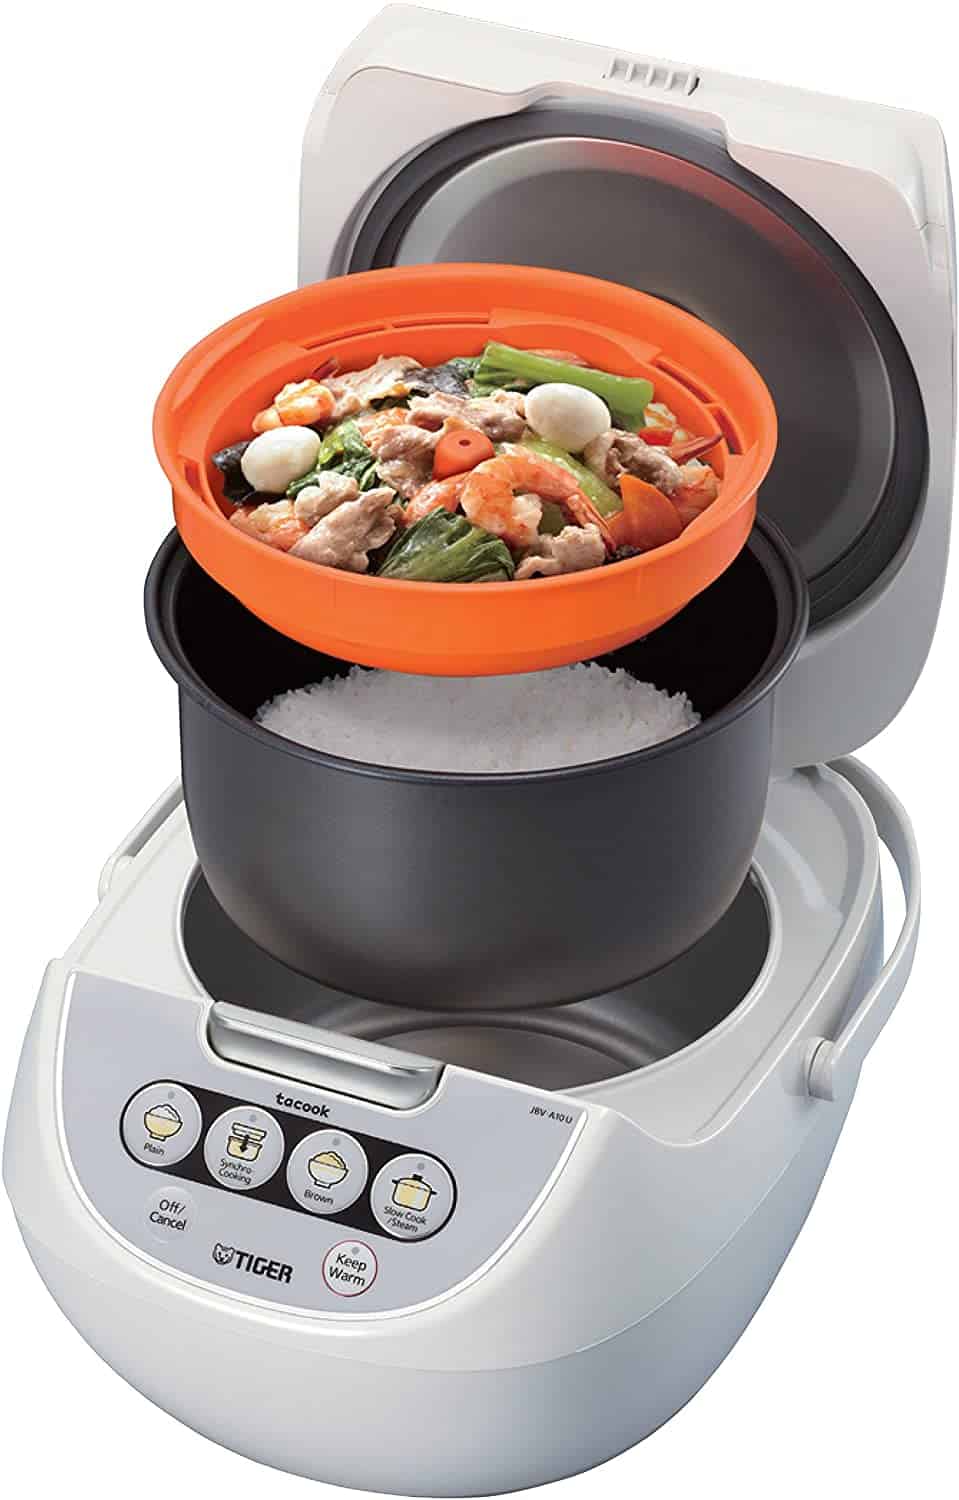 Best rice cooker with steamer basket: TIGER JBV-A10U 5.5-Cup